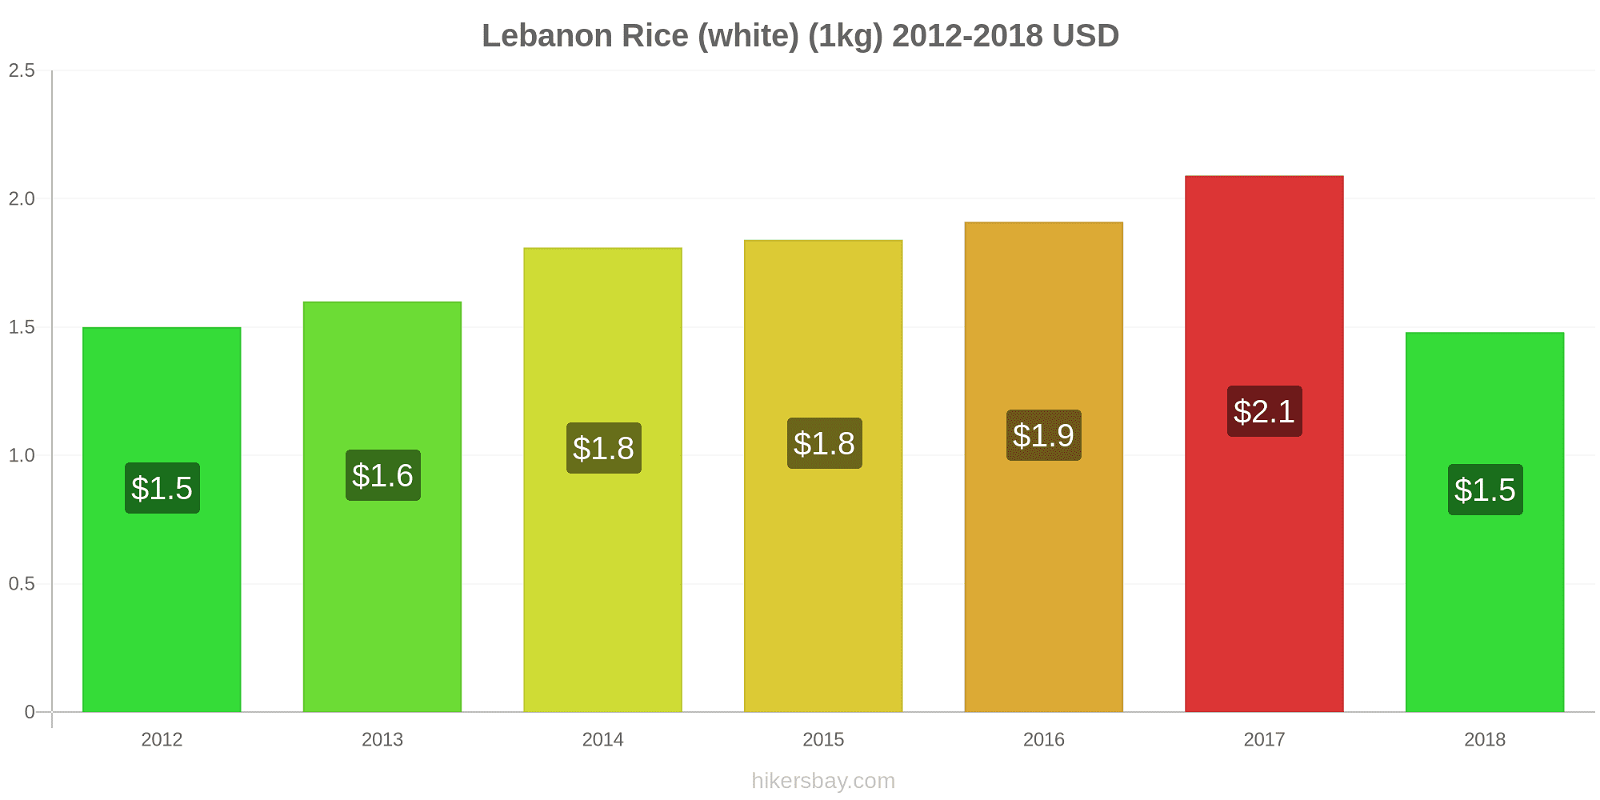 Lebanon price changes Kilo of white rice hikersbay.com